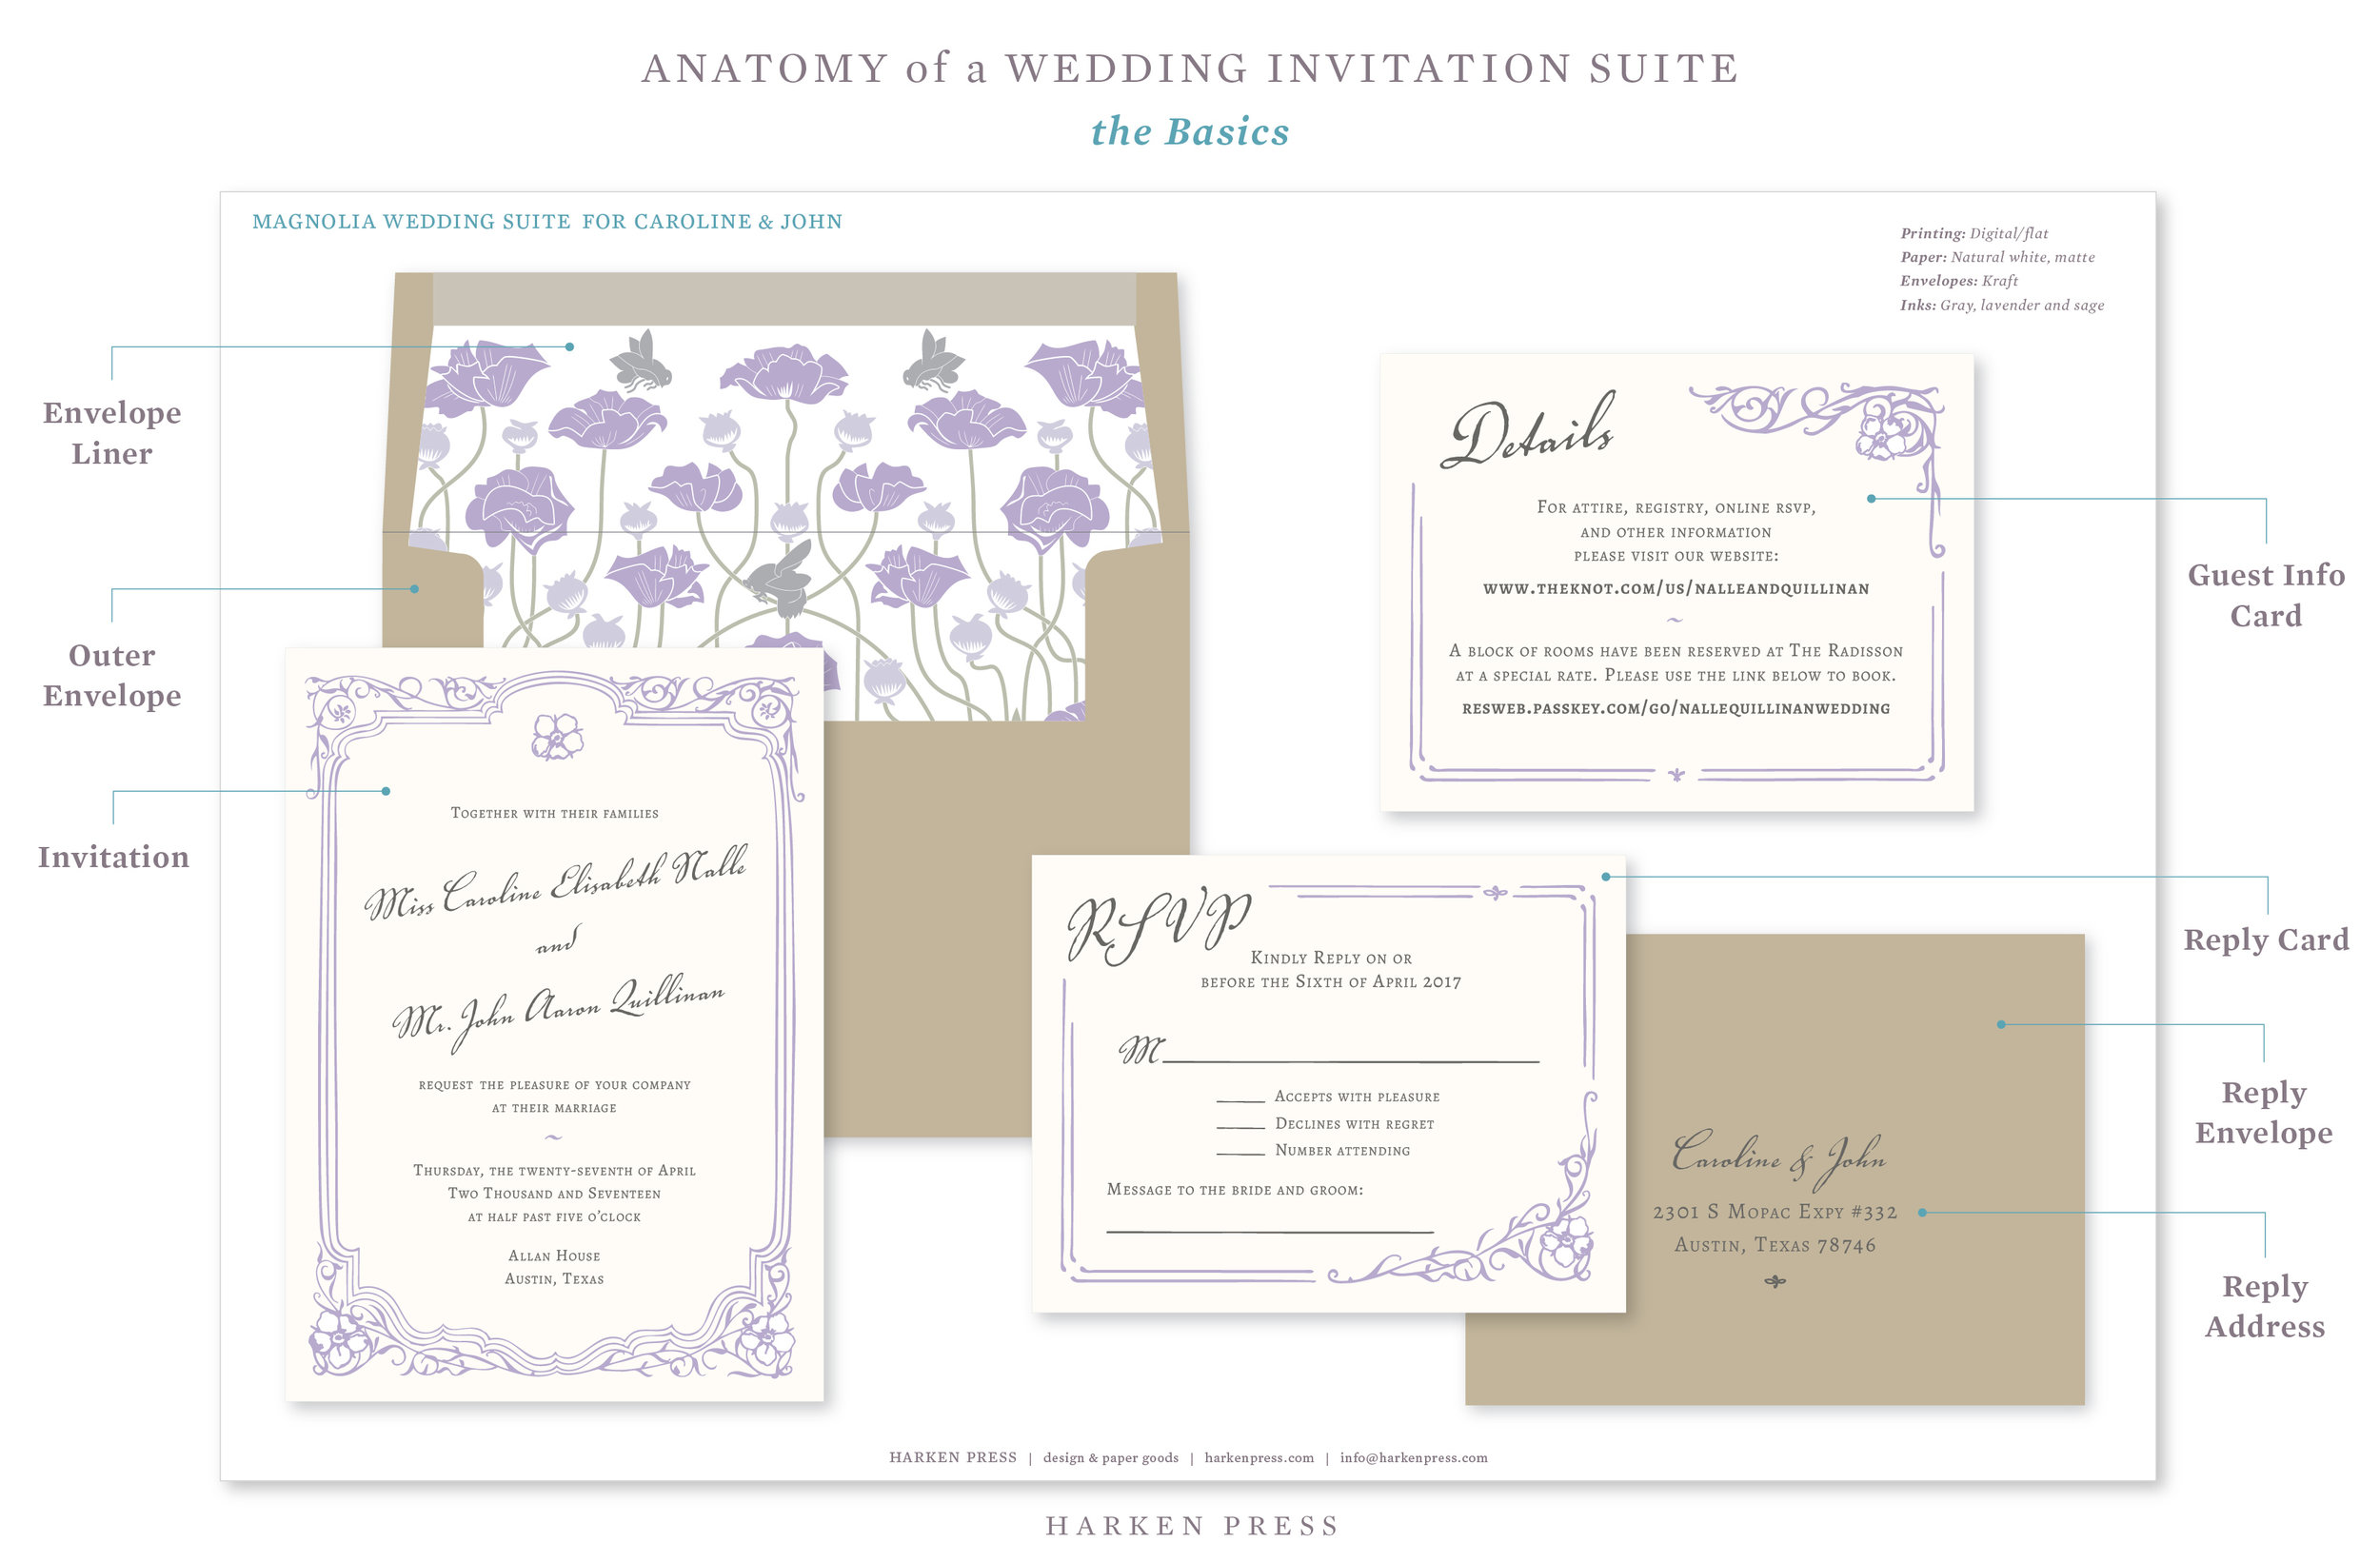 7 Wedding Invitations ideas  wedding invitations, invitations, 5x7  envelopes